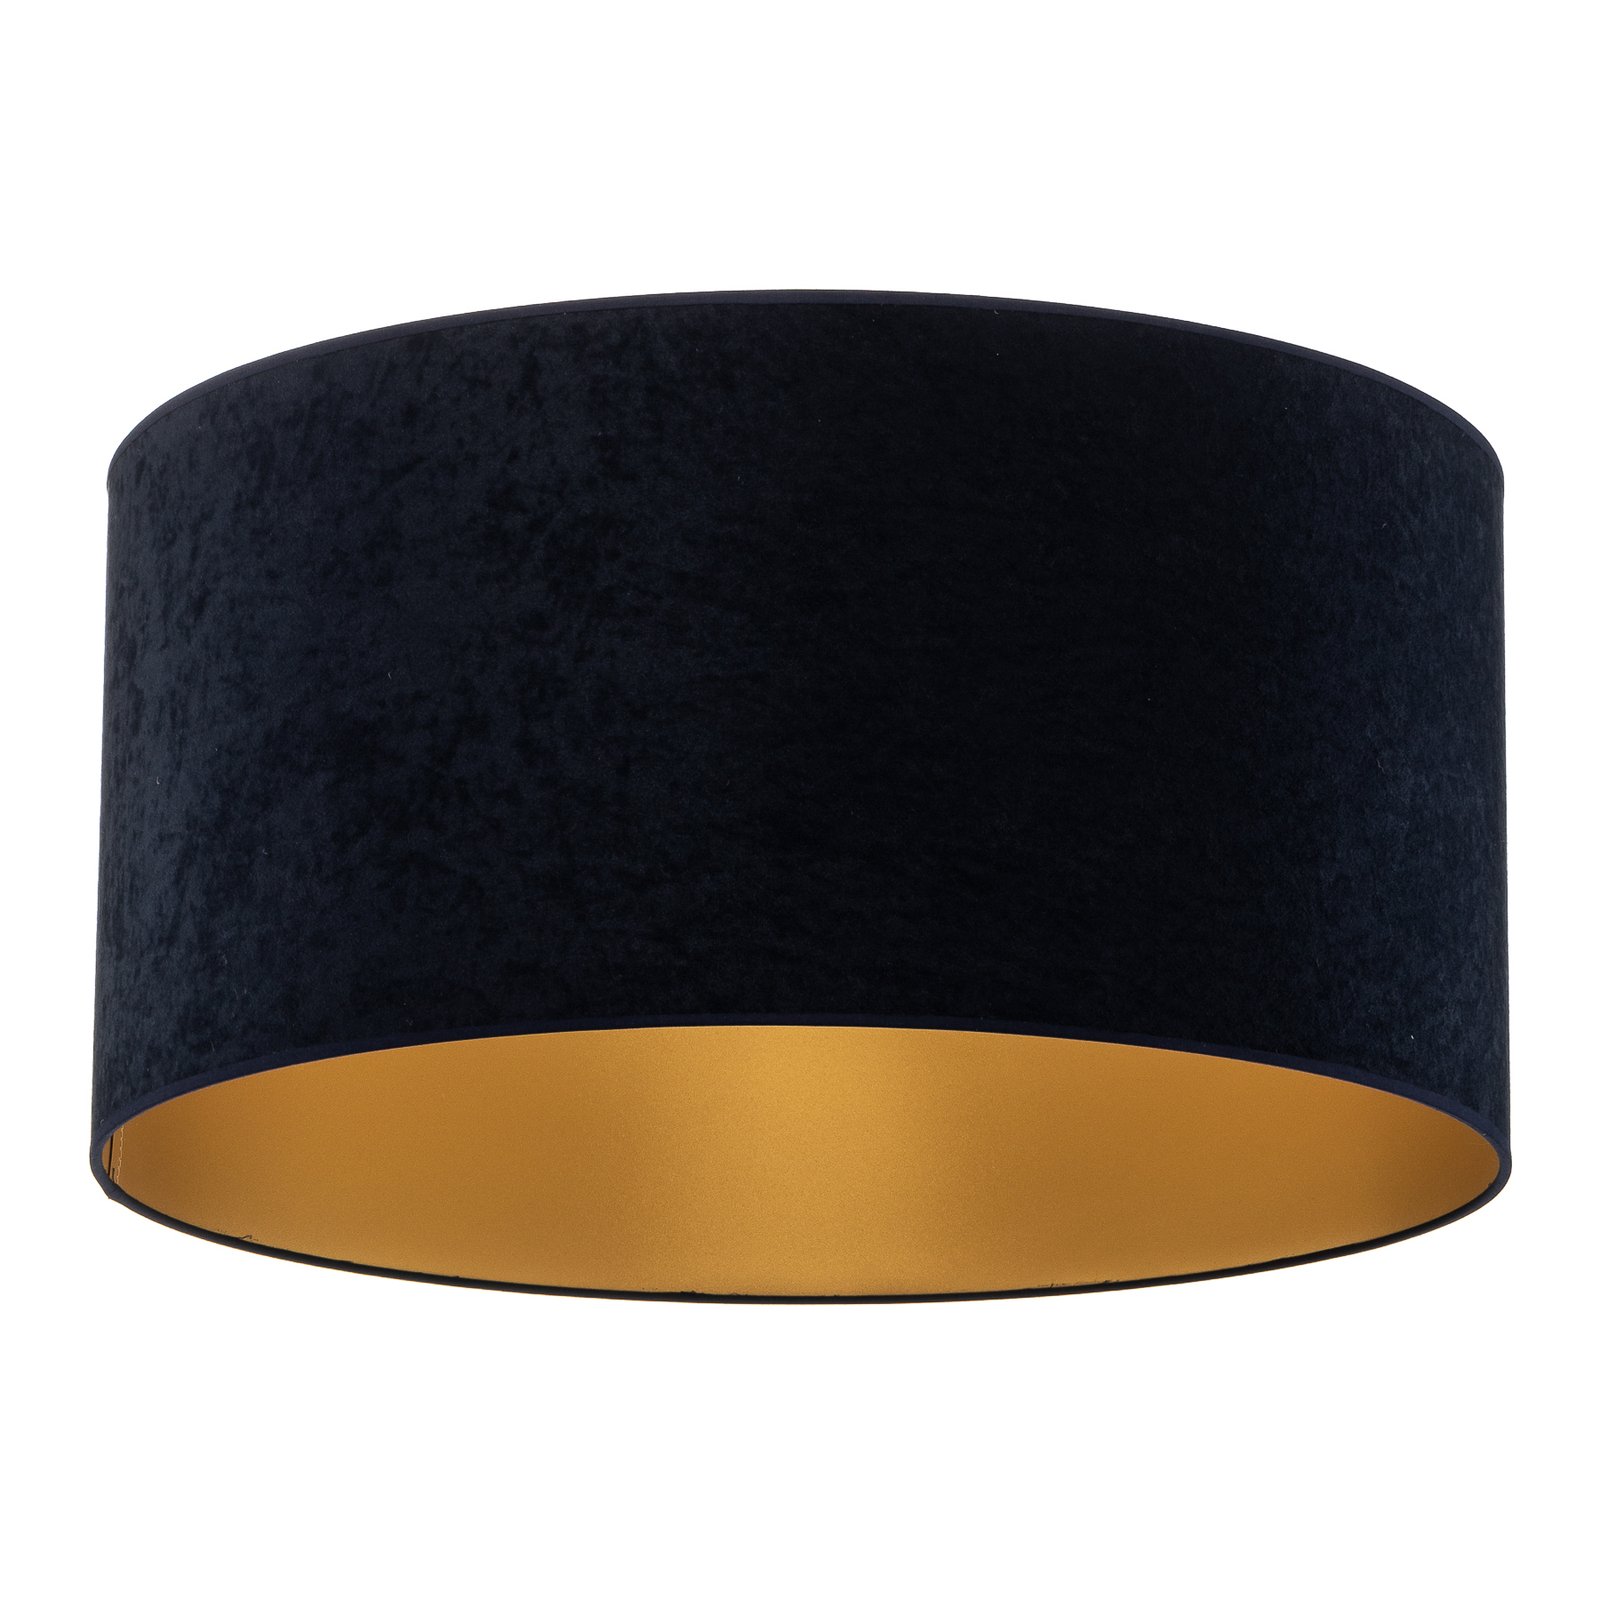 Lampa sufitowa Golden Roller Ø60cm niebieska/złota